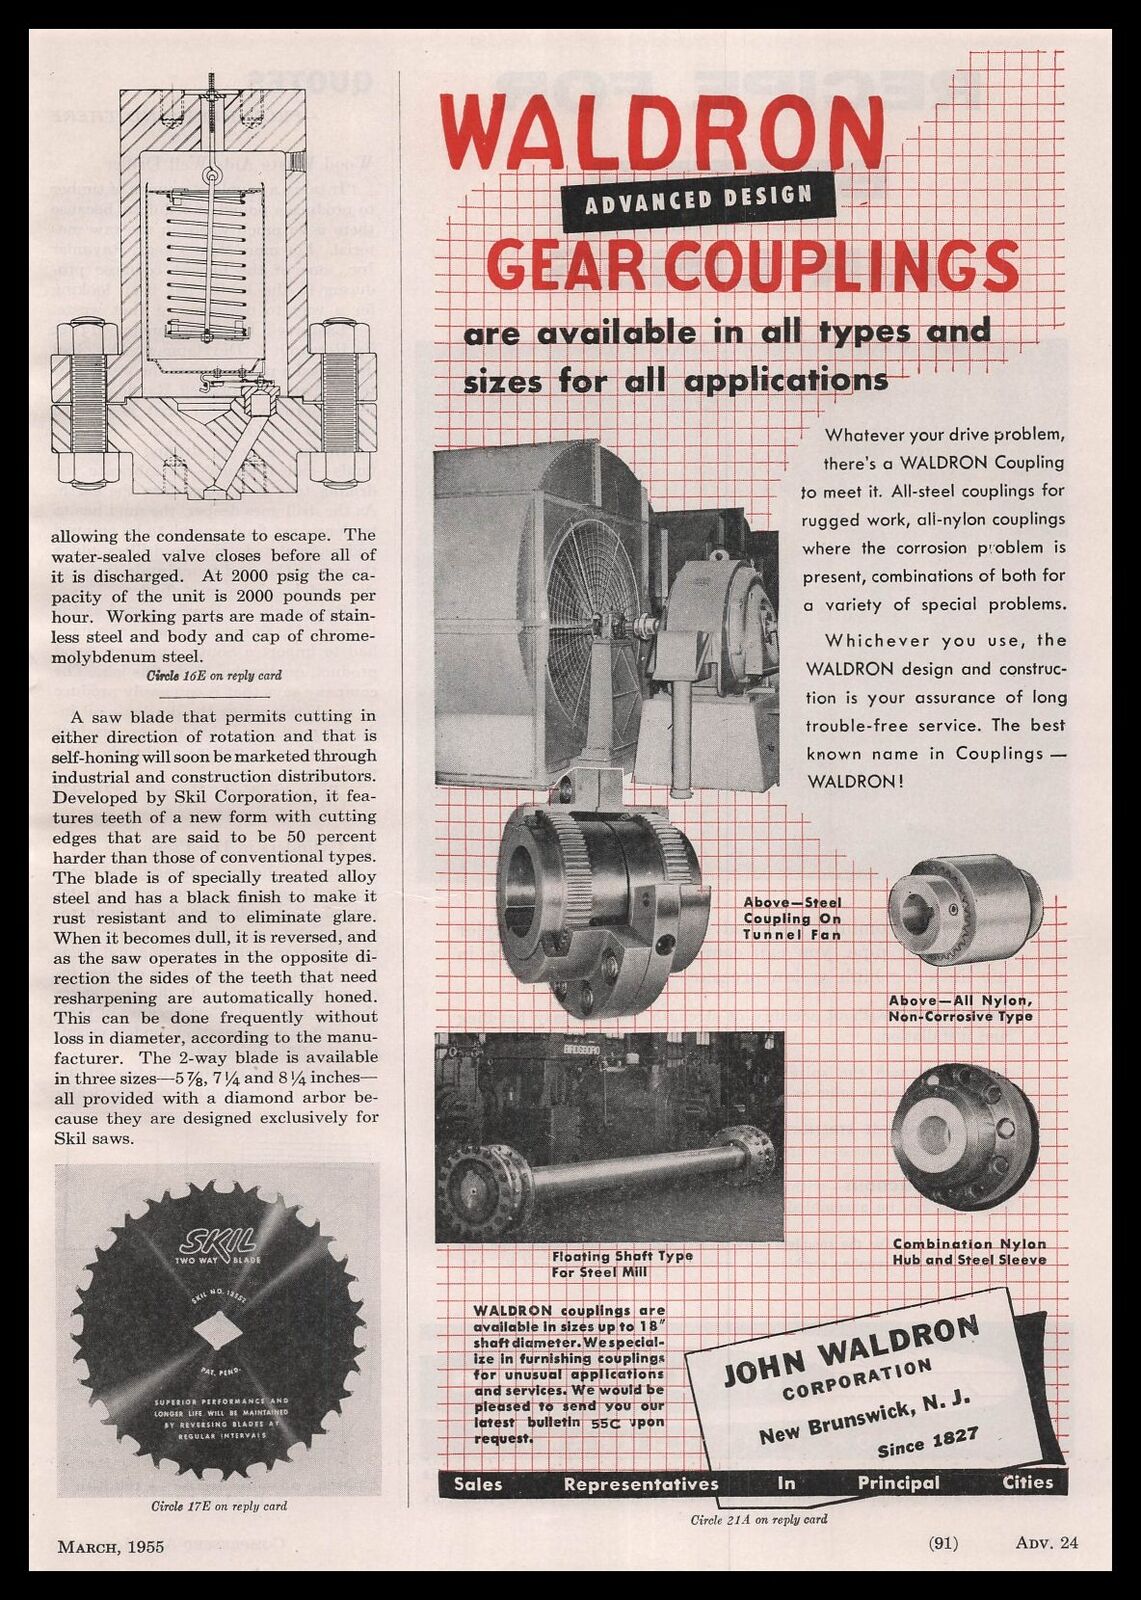 1955 John Waldron Corp. Gear Couplings New Brunswick New Jersey Vintage Print Ad